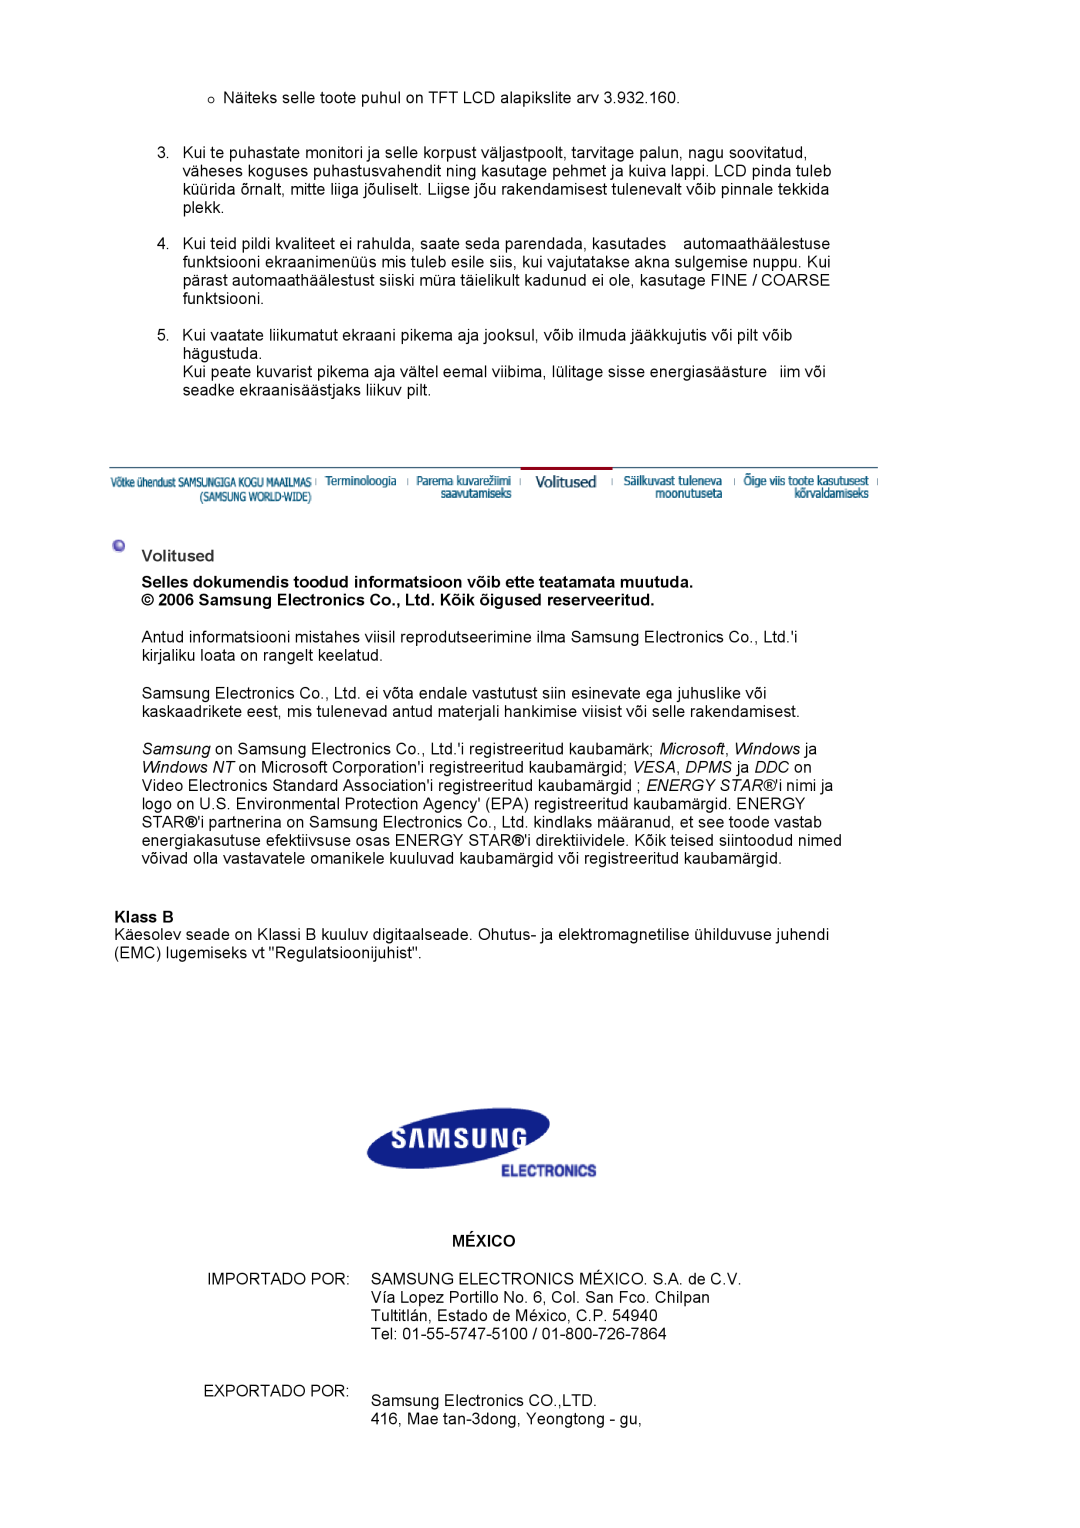 Samsung LS17MJVKS/EDC manual Volitused, Klass B, México 